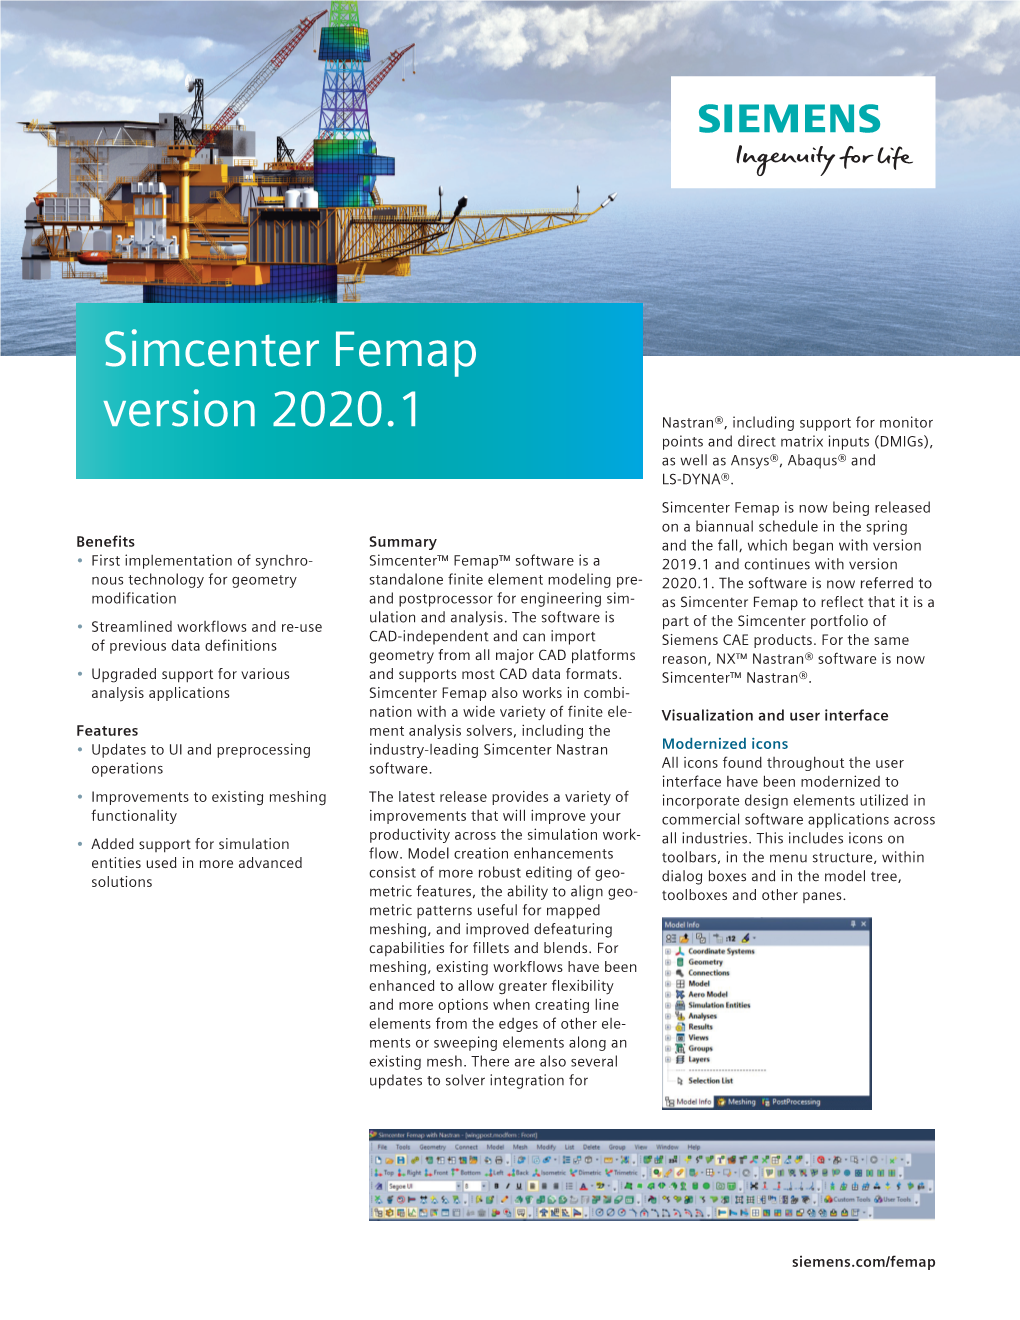 Simcenter Femap Version 2020.1